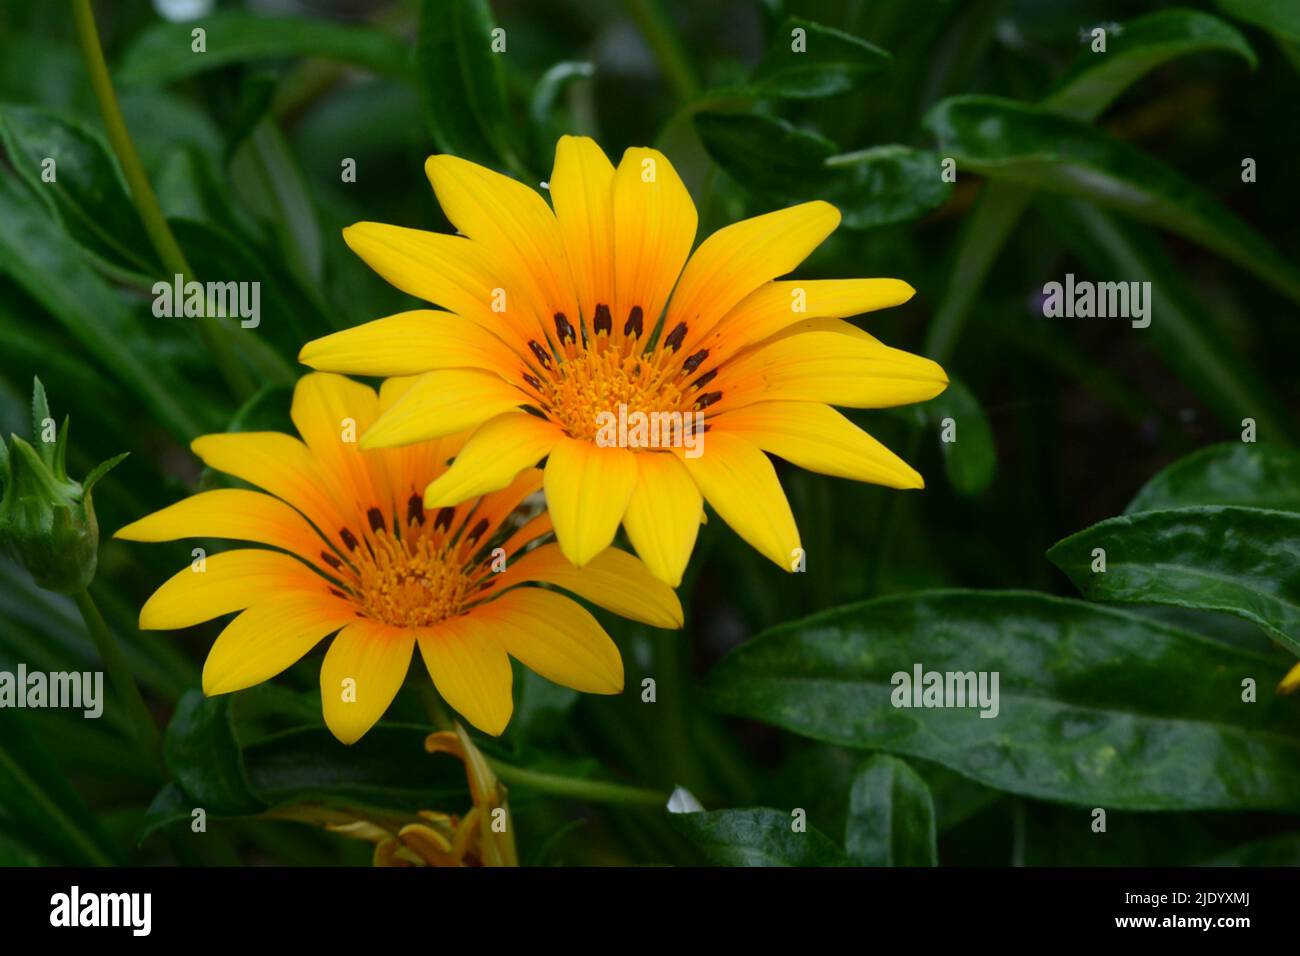 Gazania Daybreak Naranja brillante Tesoro flor naranja-amarillo margarita como flor Foto de stock